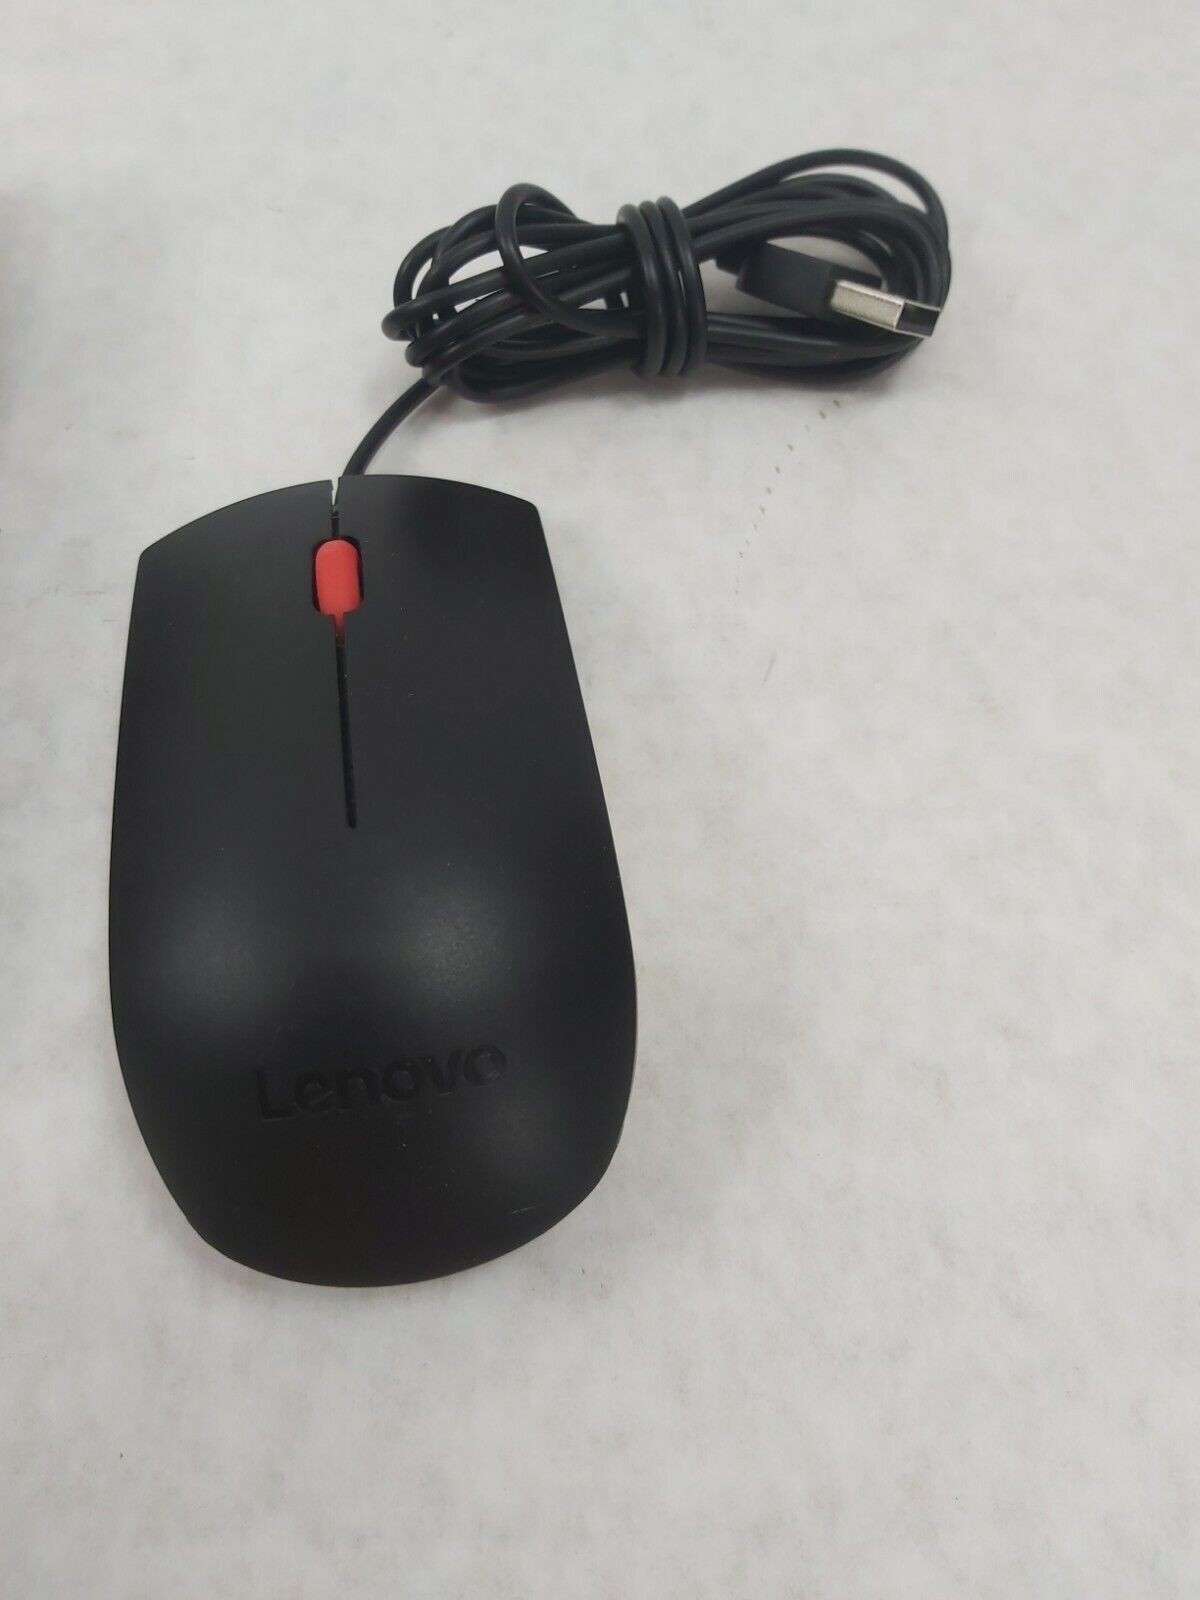 Lenovo SK-8821 Keyboards and MOEUUO or MSU1175 Mice Keyboard/Mouse Combo